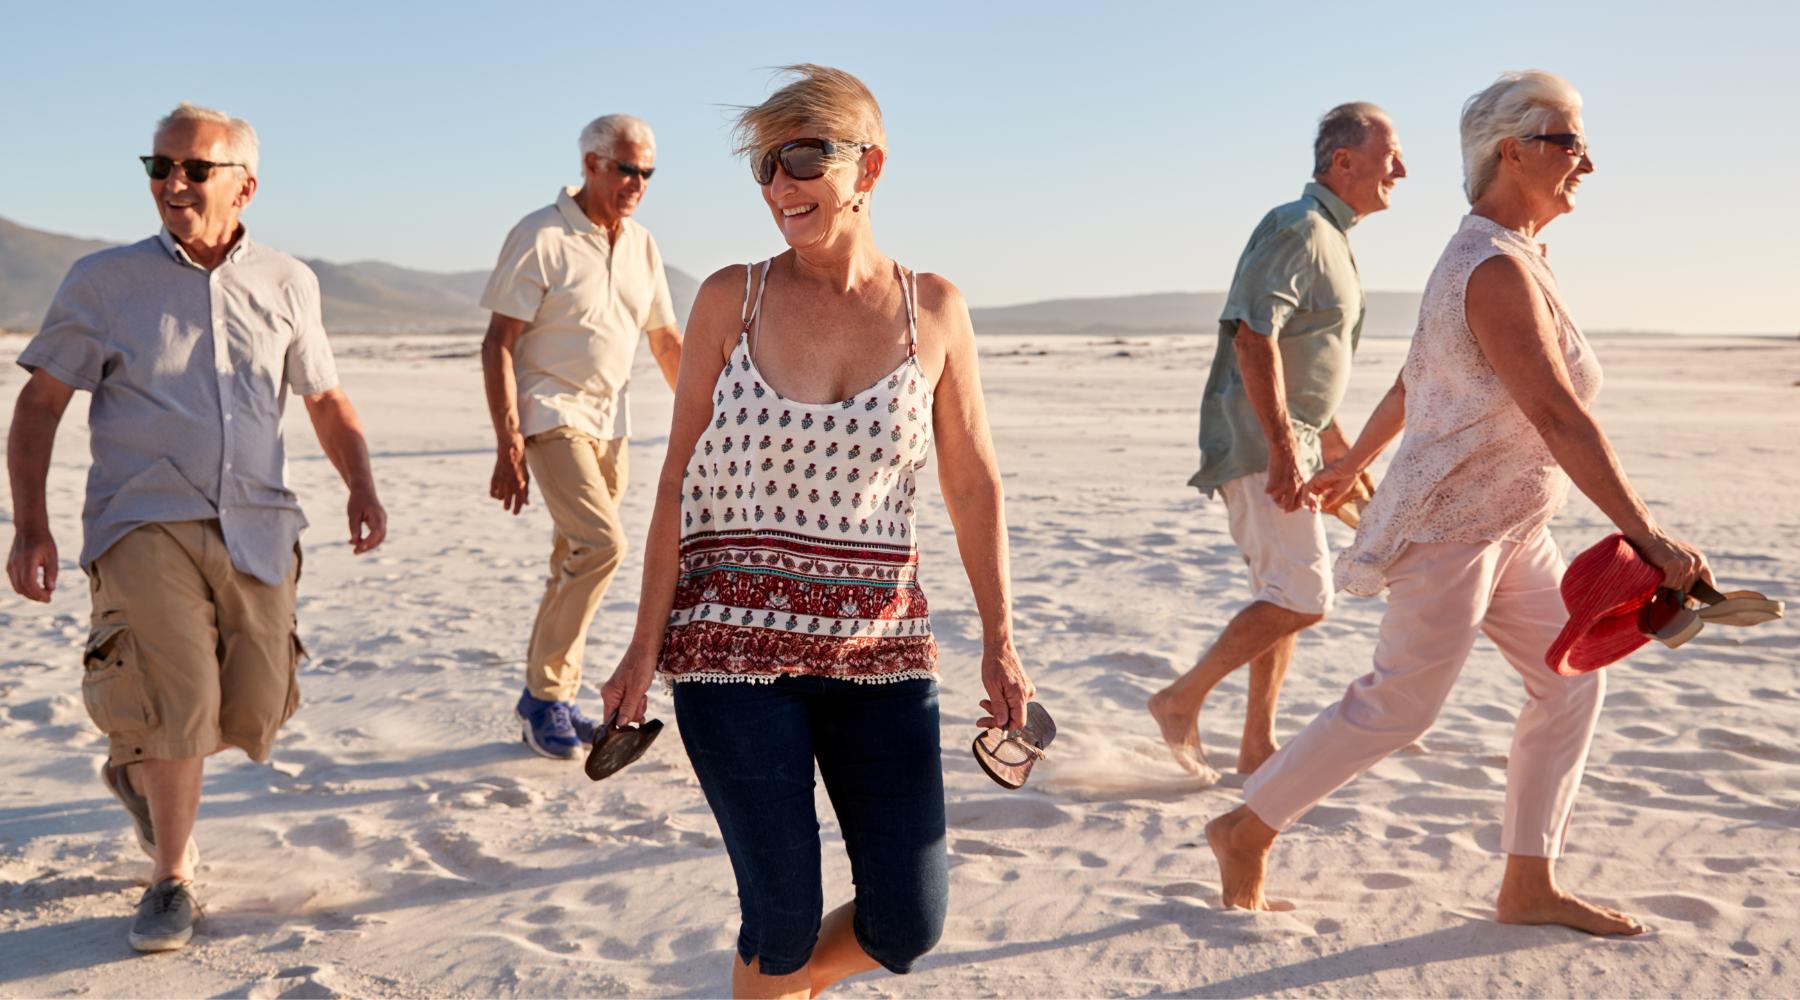 Group of elderly people having fun walking on the beach at sunset